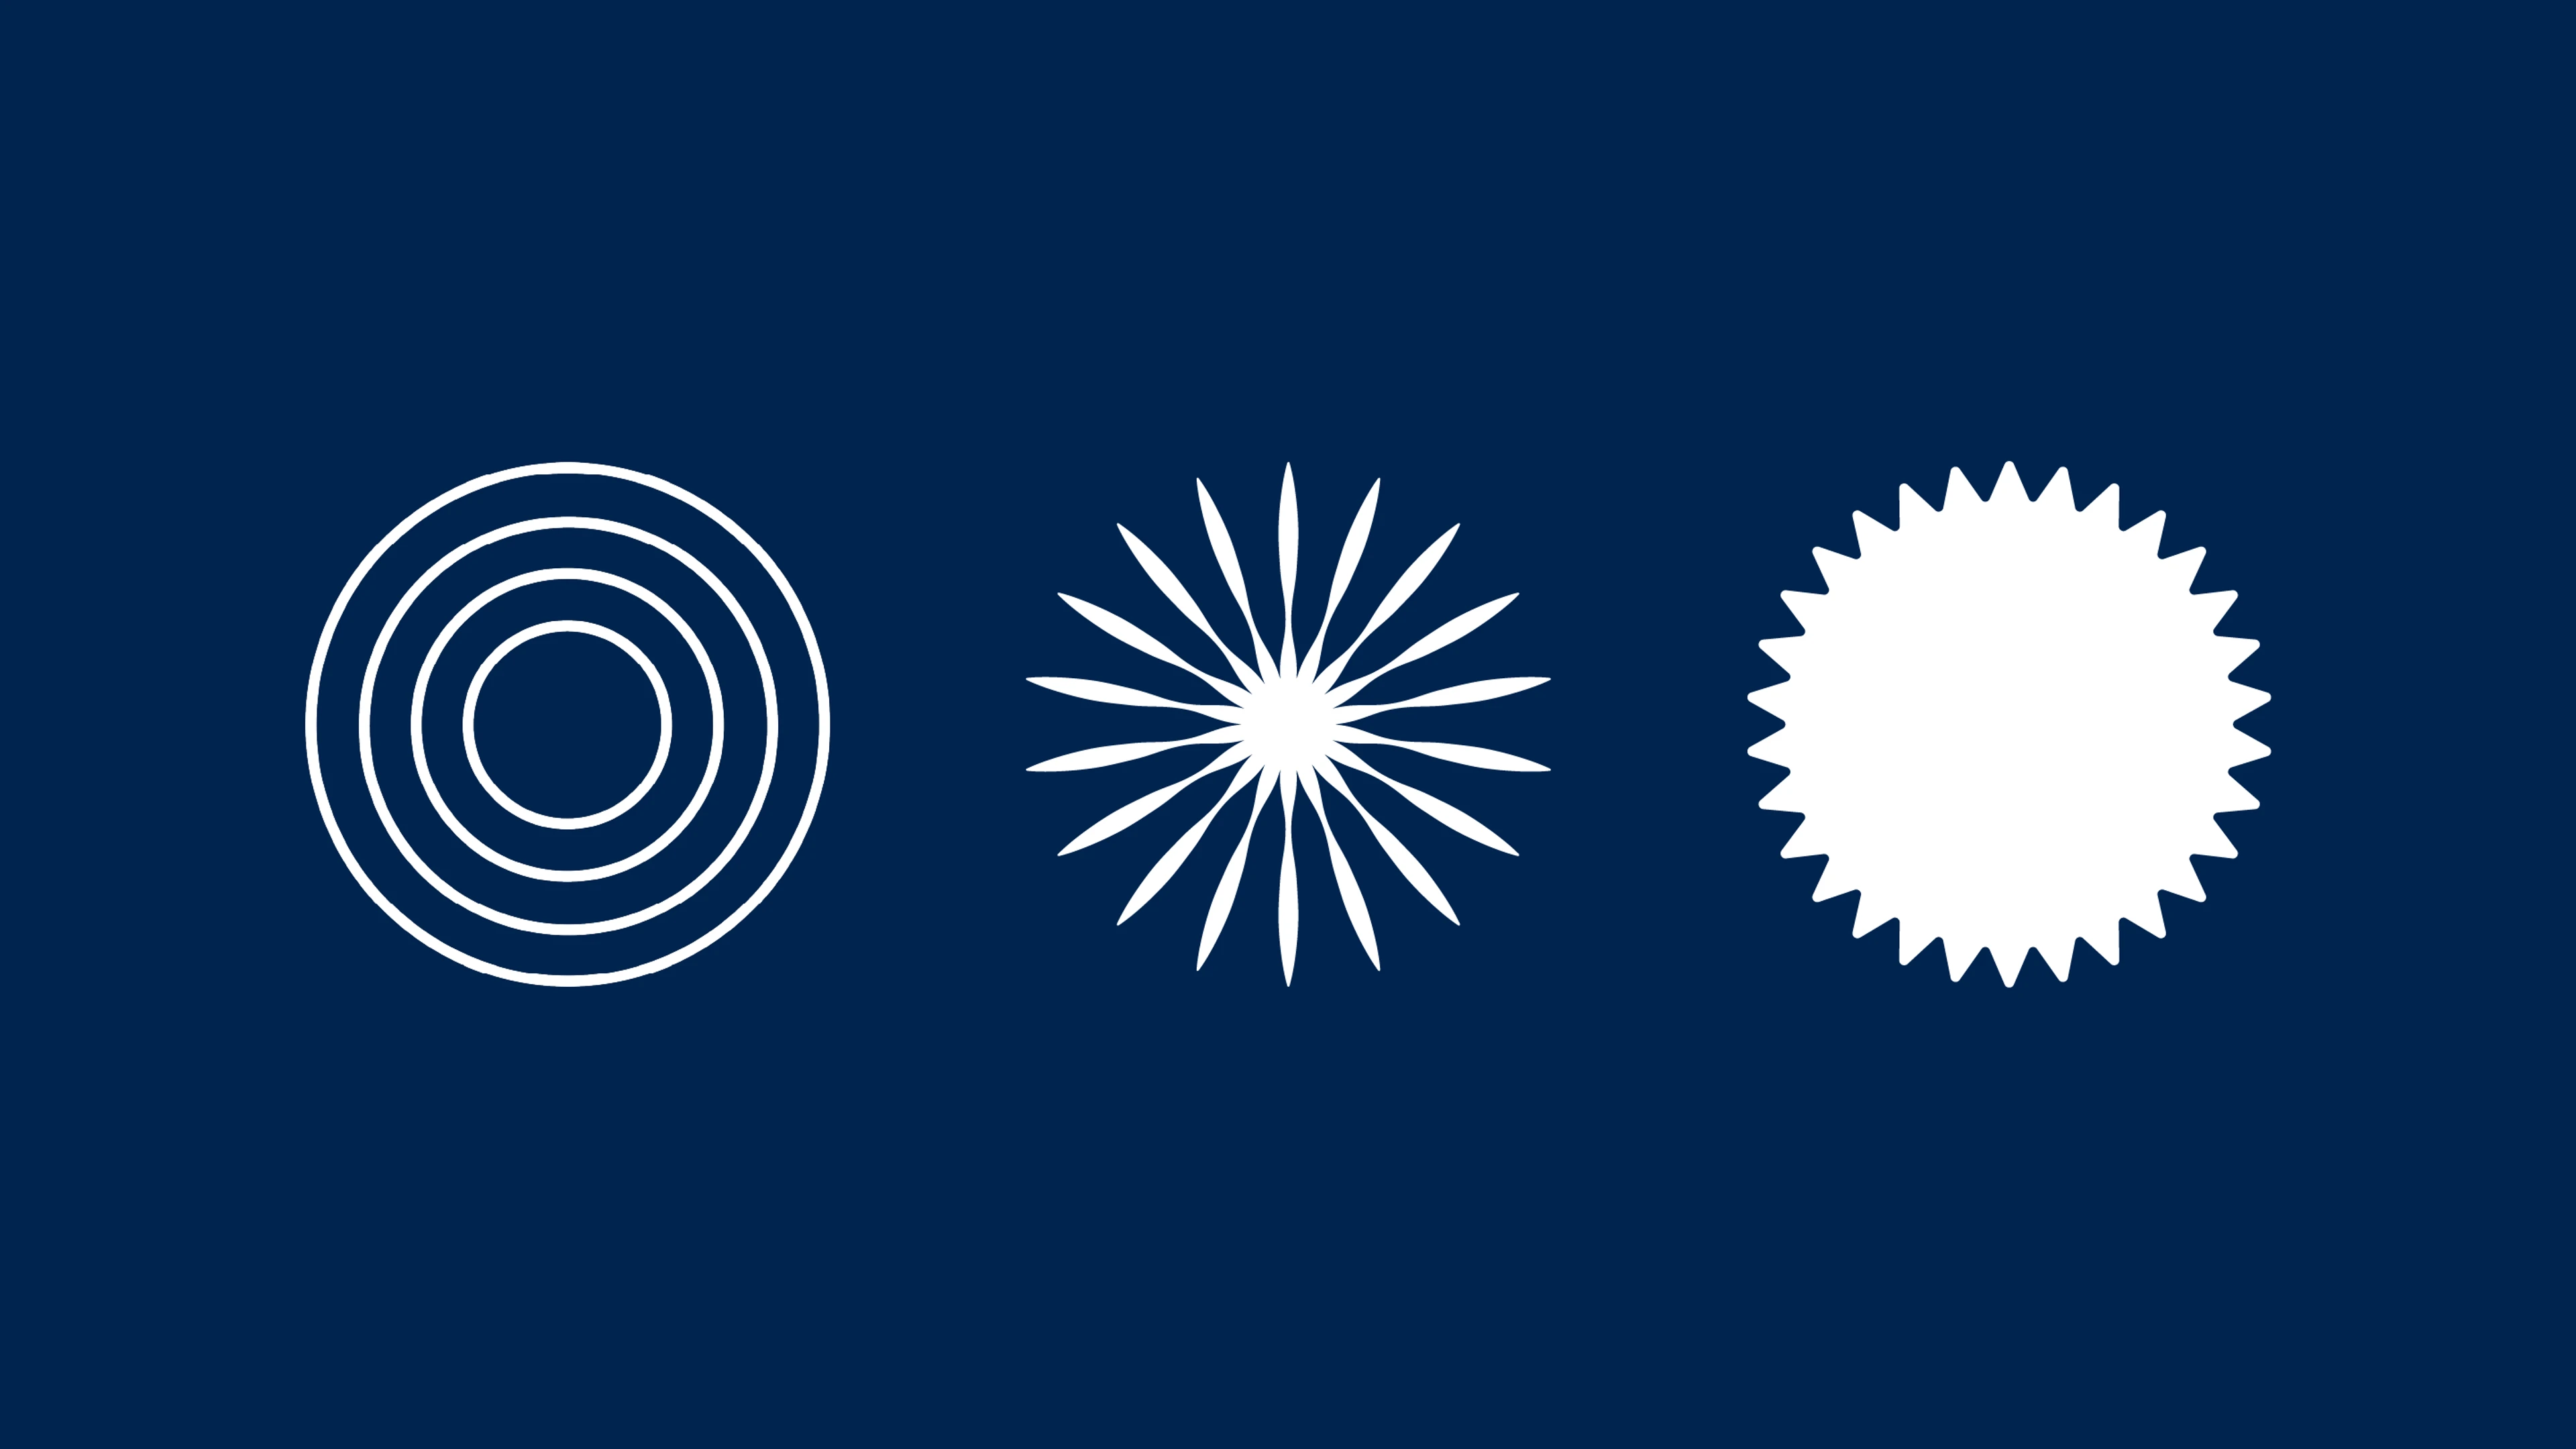 three white circular icons on blue background